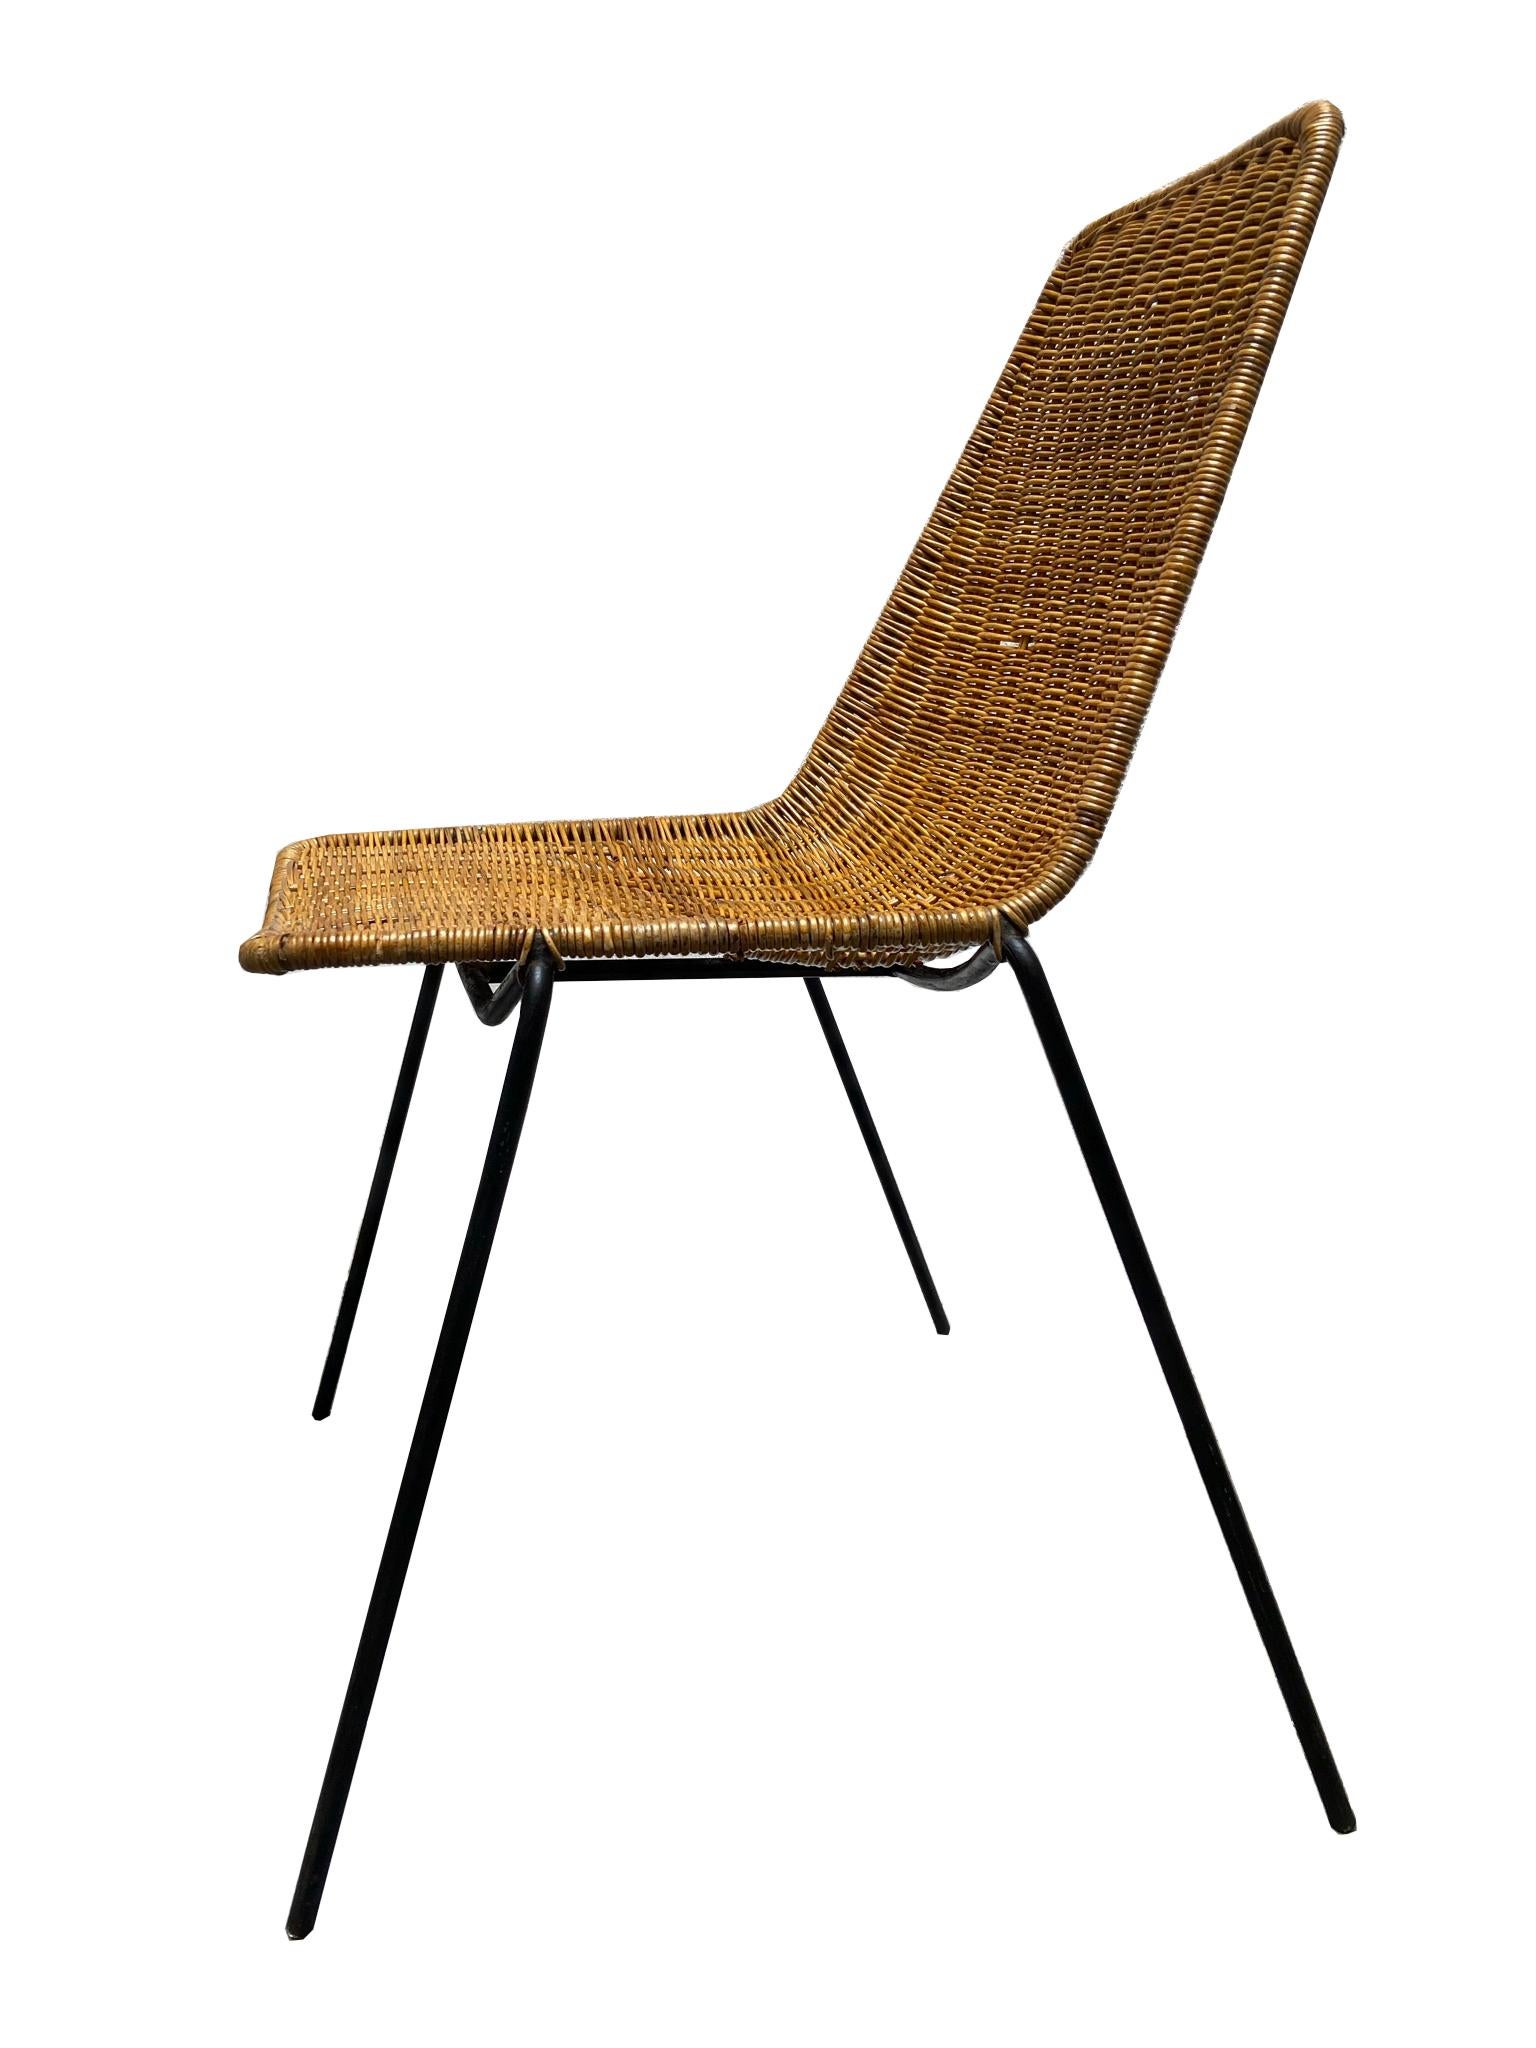 Swiss Gian Franco Legler Vintage Rattan Metal Mid-Century Modern Chairs, 1970s